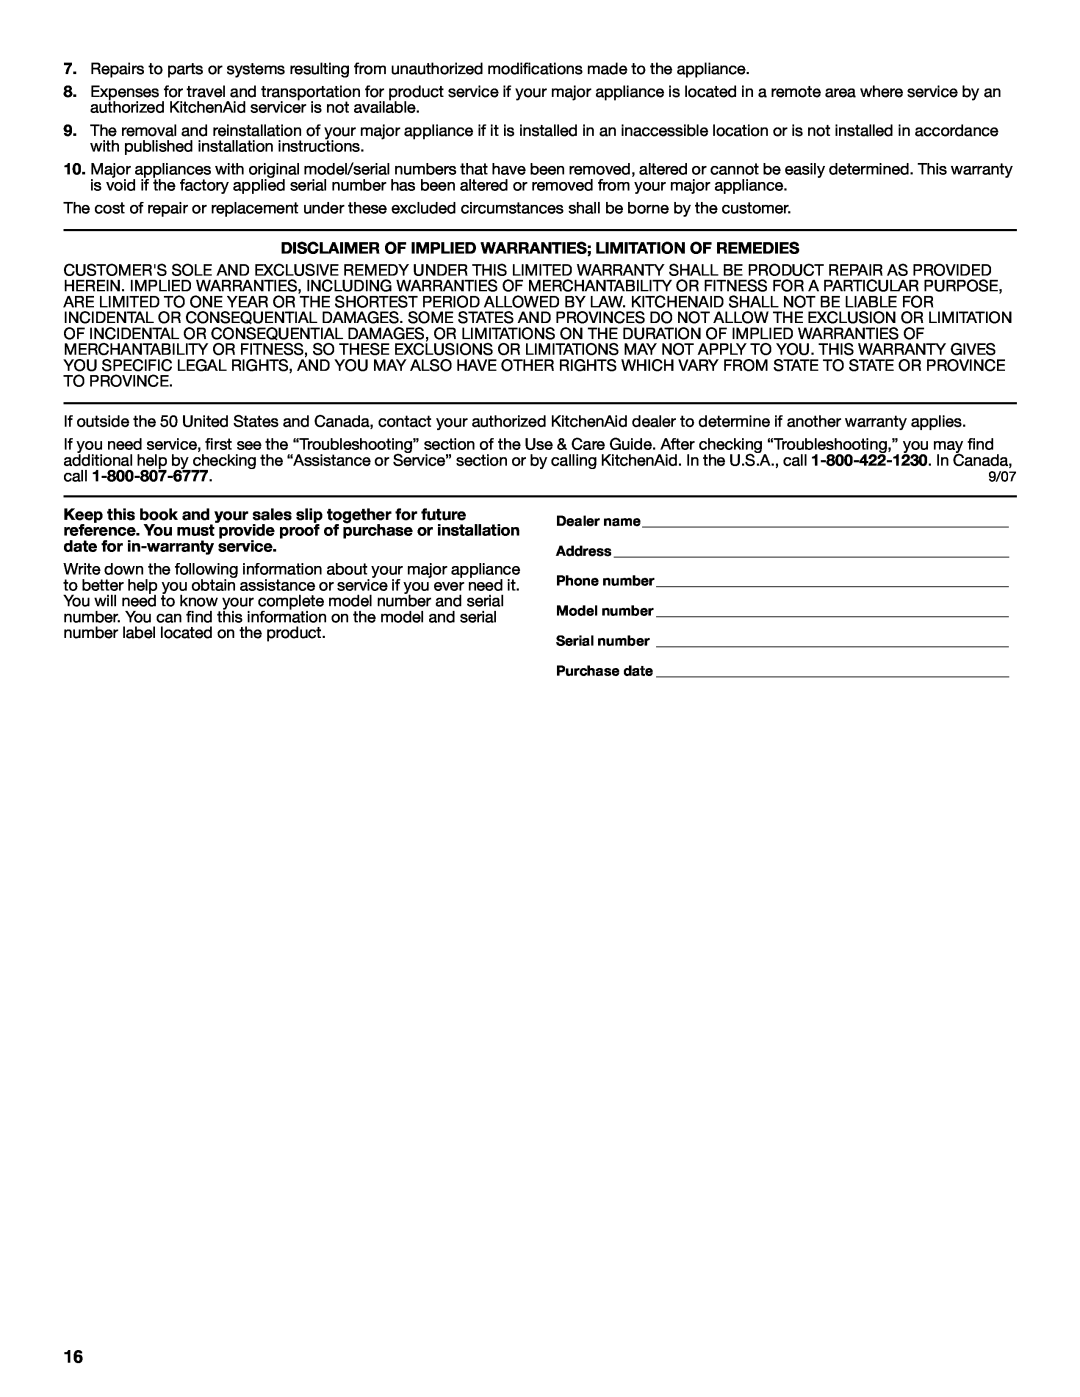 KitchenAid KGCU483VSS manual Disclaimer Of Implied Warranties Limitation Of Remedies, call, Purchase date 